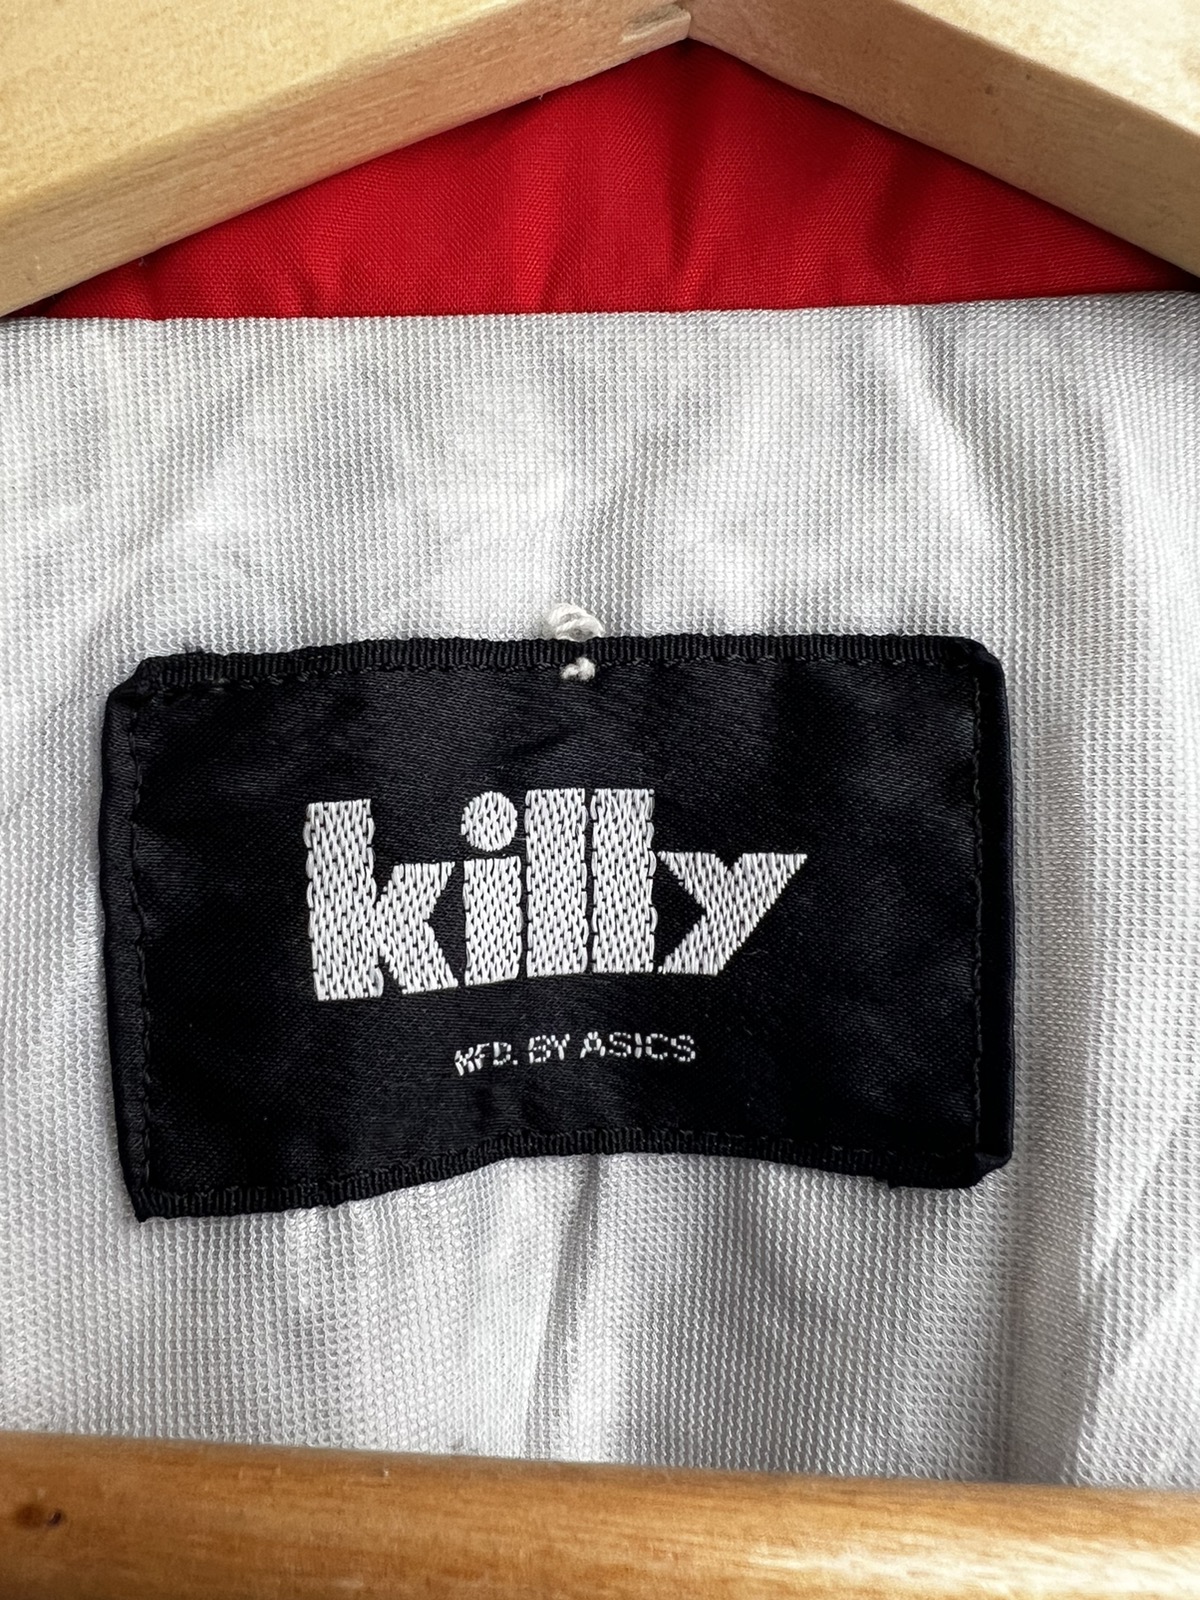 Killy MFD by Asics Gore tex Snowboard Jacket - 21